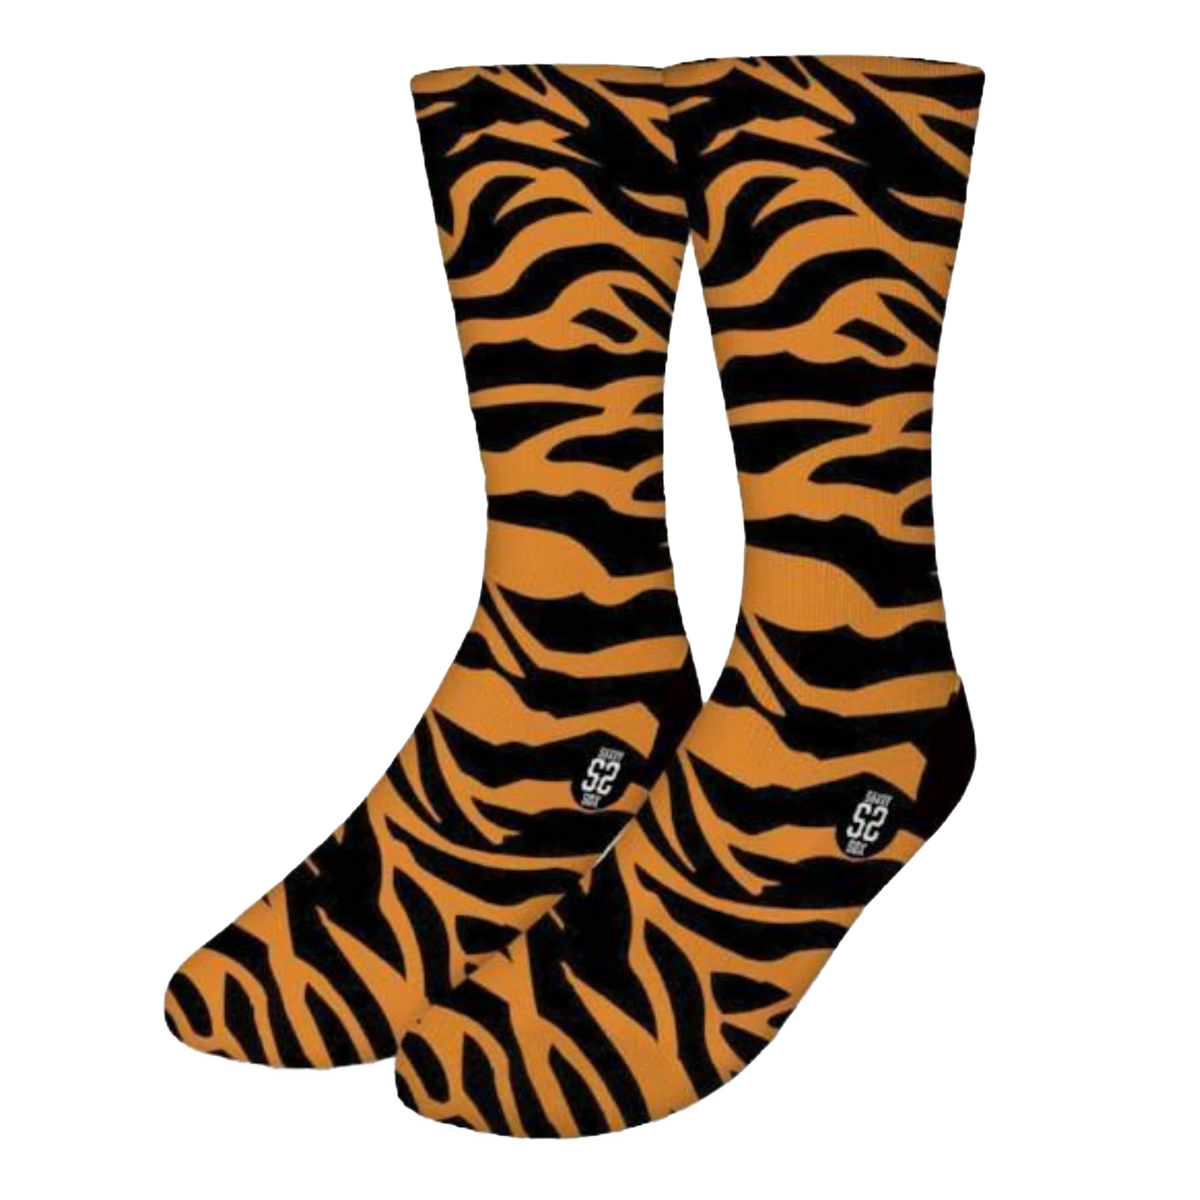 Classic Tiger Stripes Fun Animal Print Socks - 1 Pair